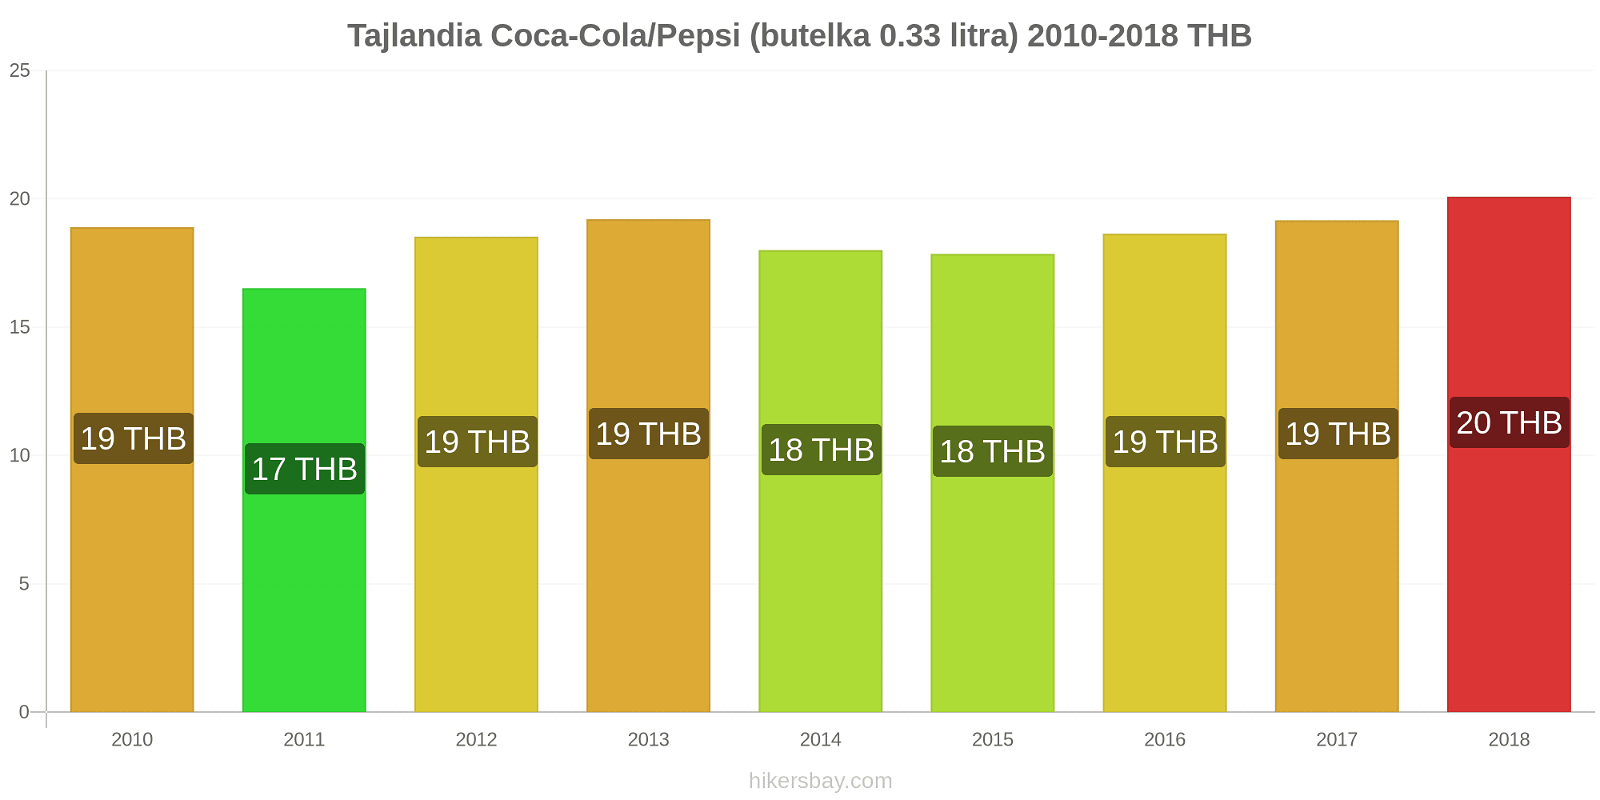 Tajlandia zmiany cen Coca-Cola/Pepsi (butelka 0.33 litra) hikersbay.com